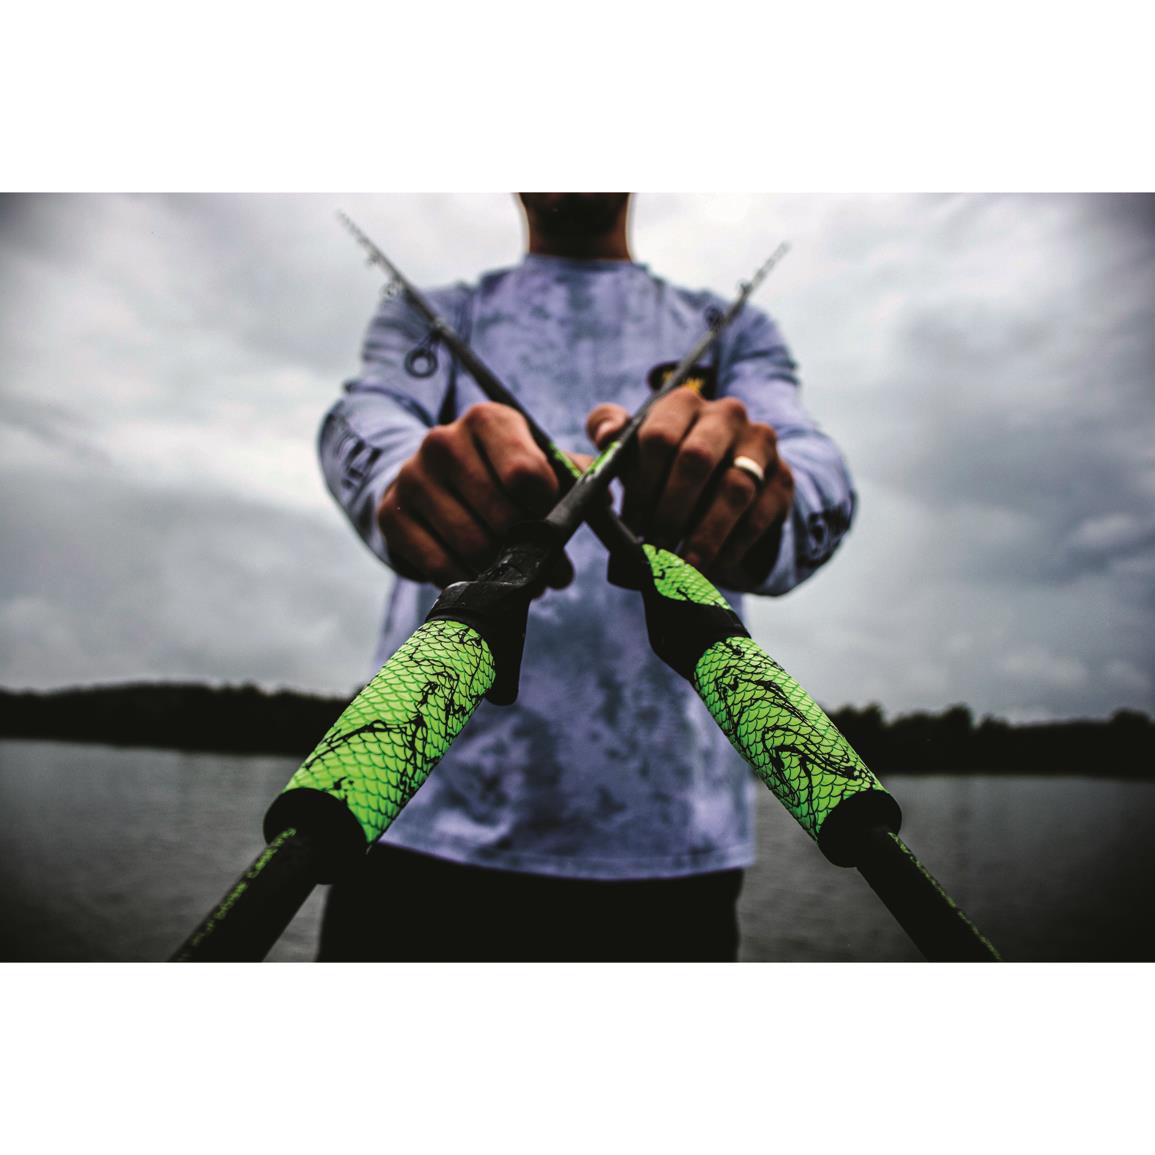 St. Croix Triumph Musky Casting Fishing Rod, 7' Length, Medium